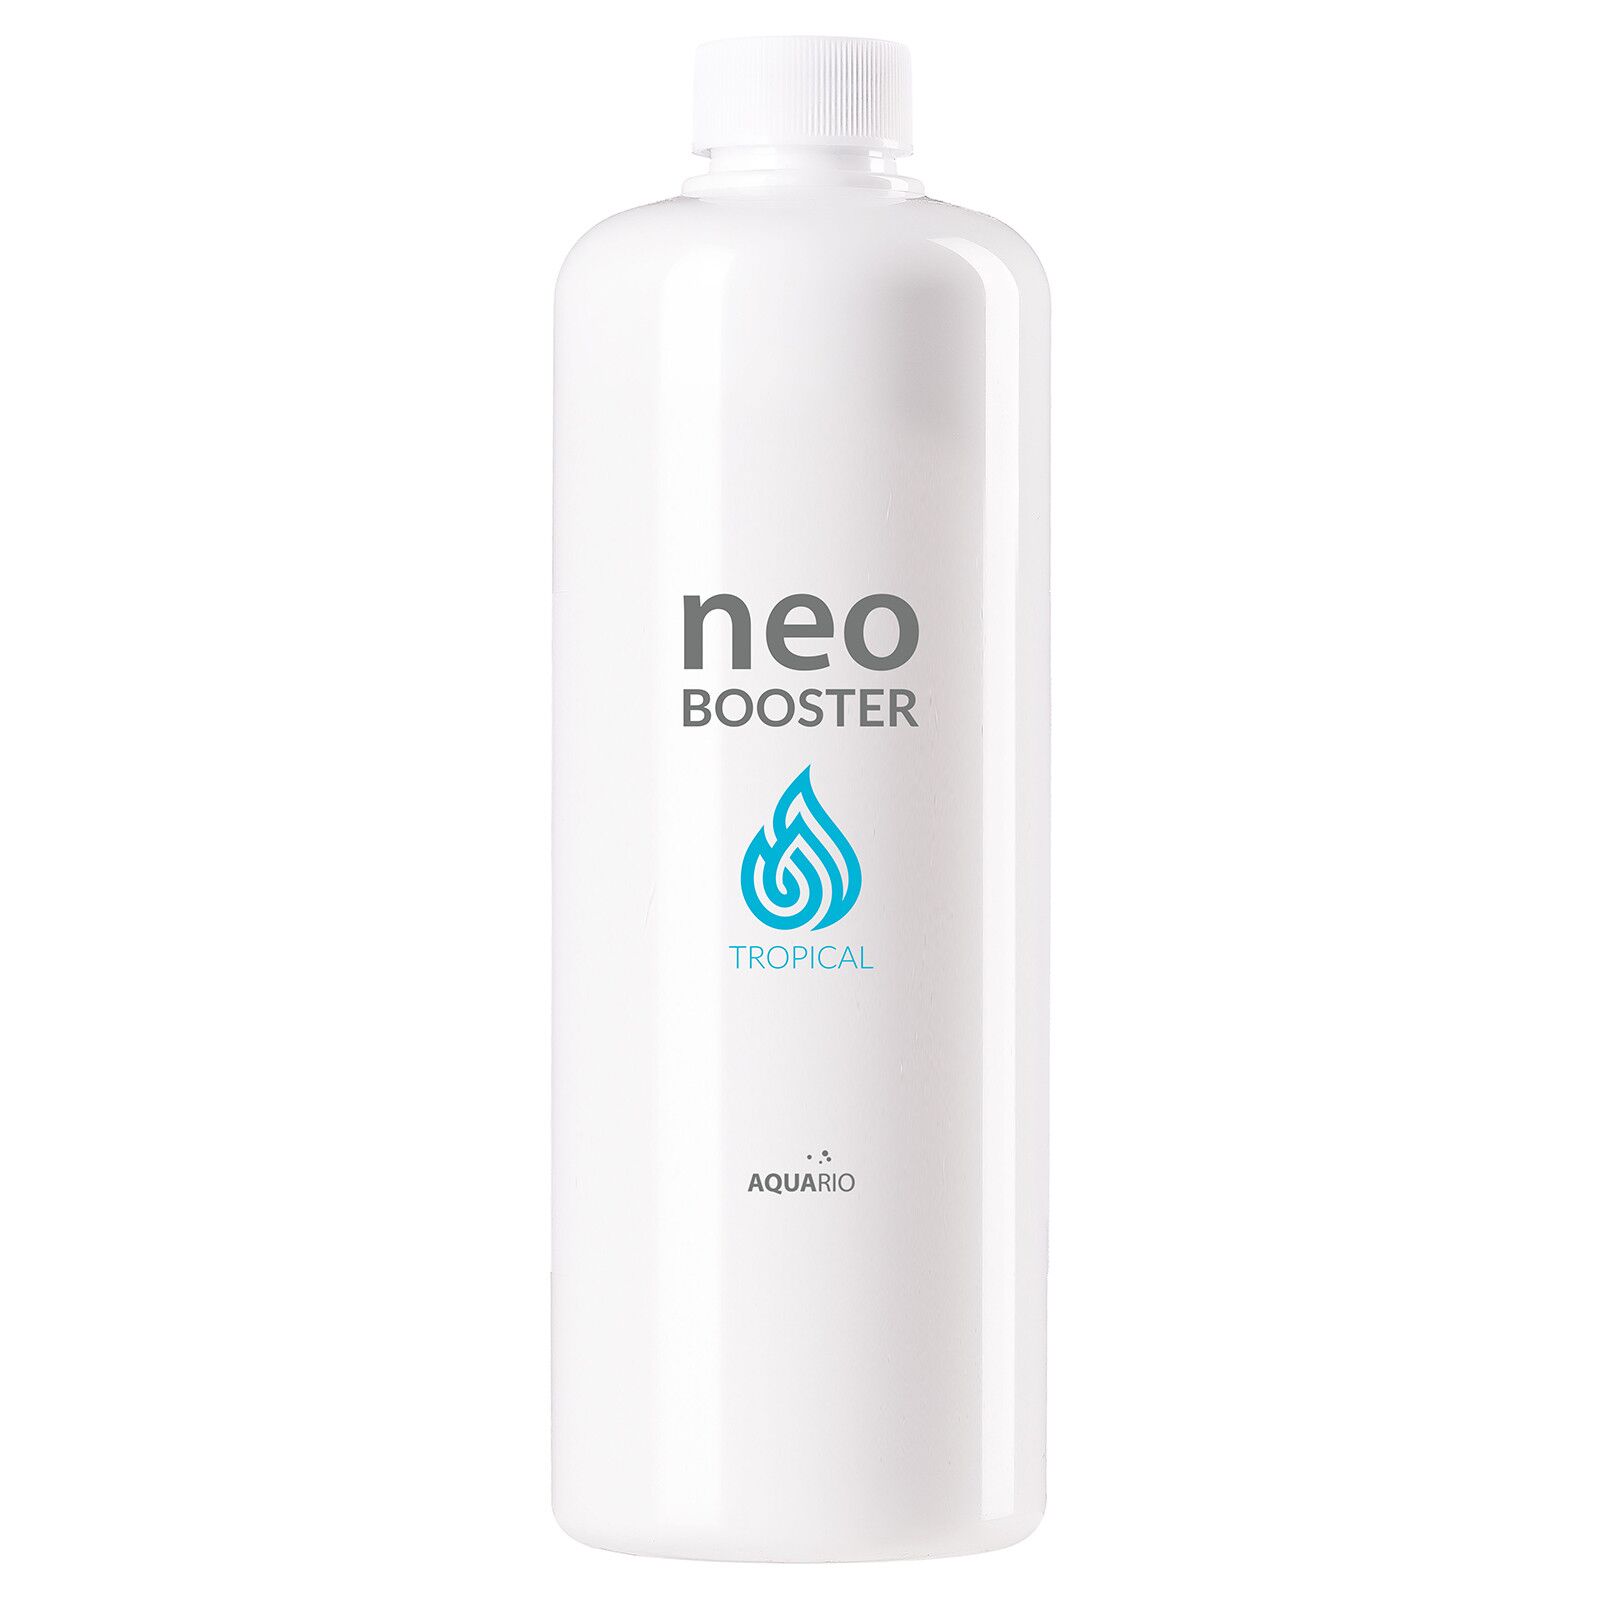 AQUARIO - Neo Booster Tropical - Water Conditioner